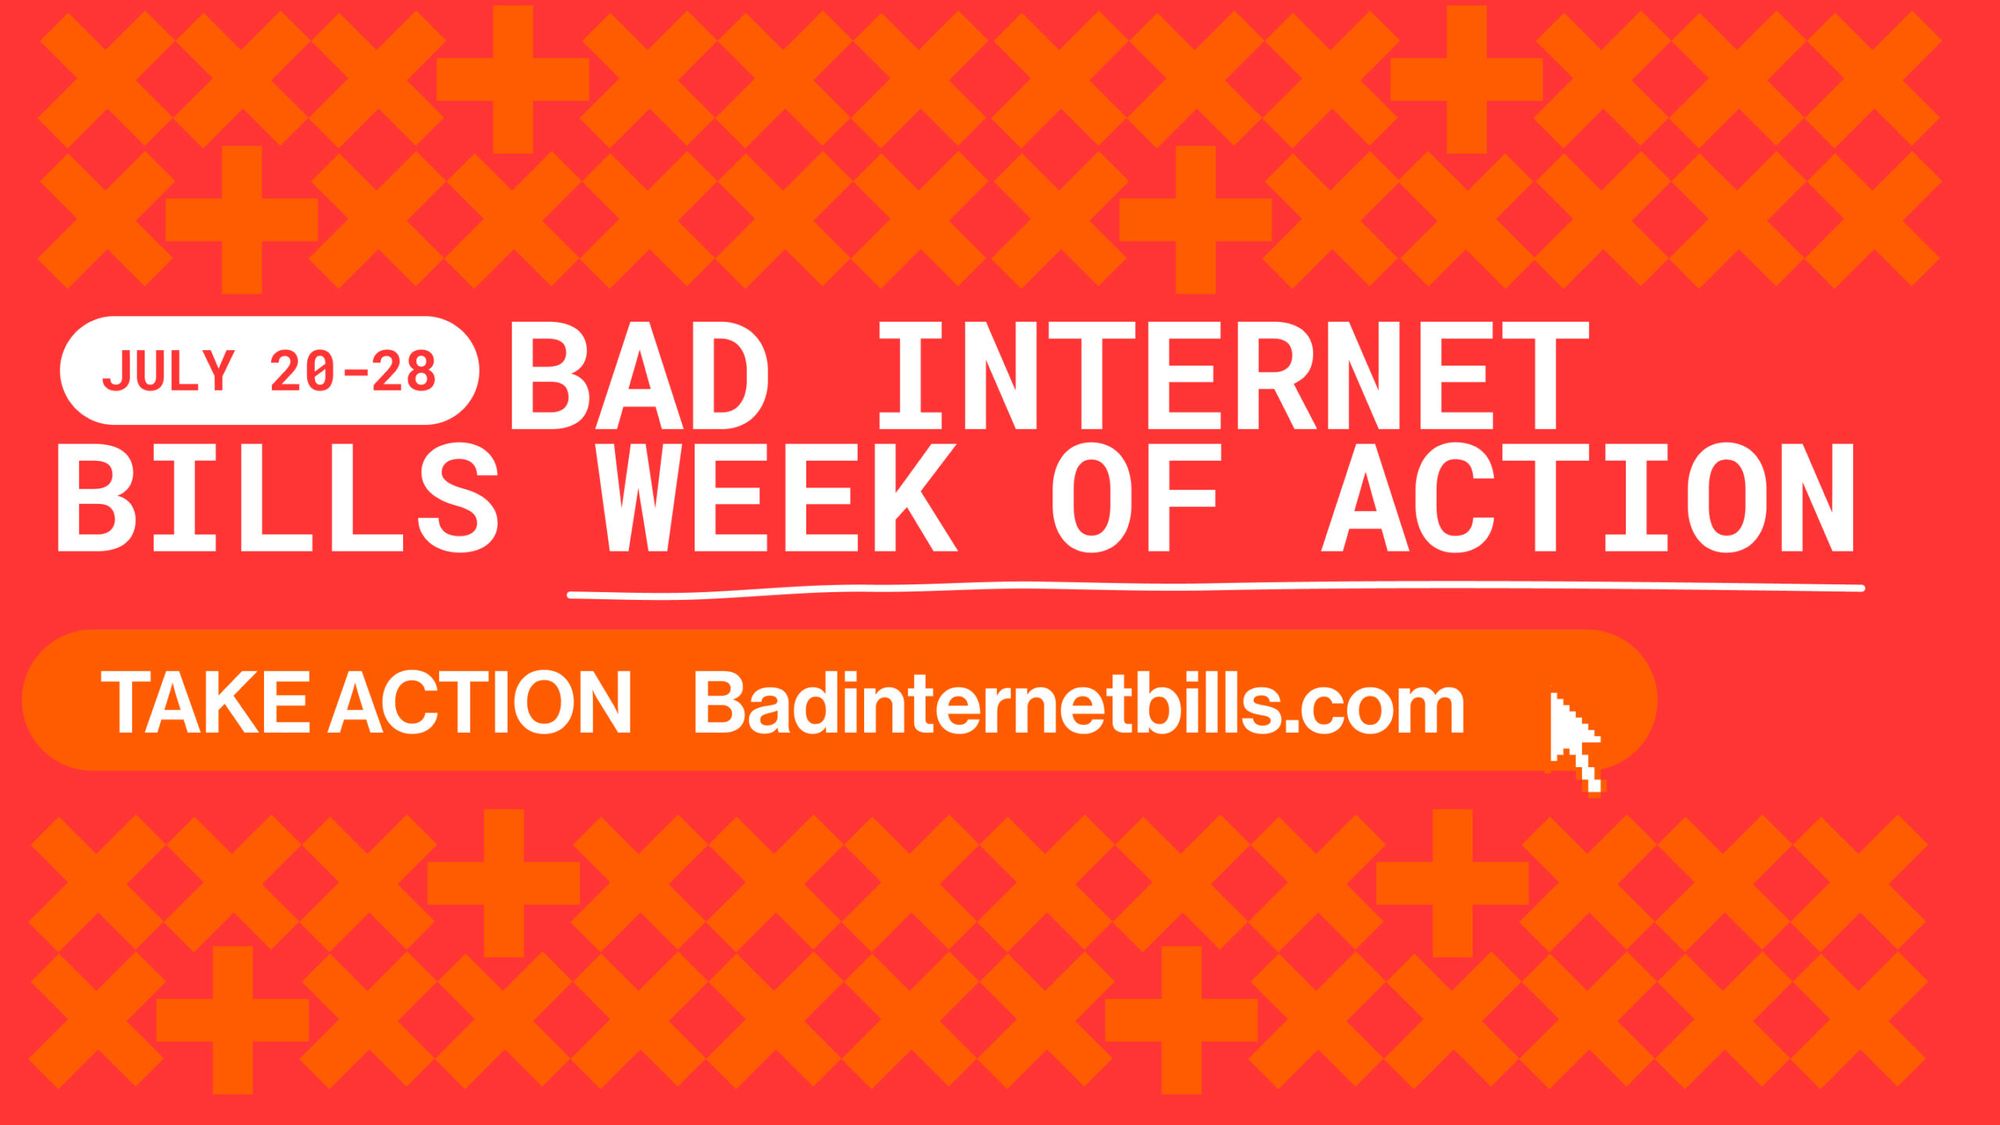 July 20-28.  Bad internet bills week of action.  Take action.  Badinternetbills.com.  An orange background, with white text. 